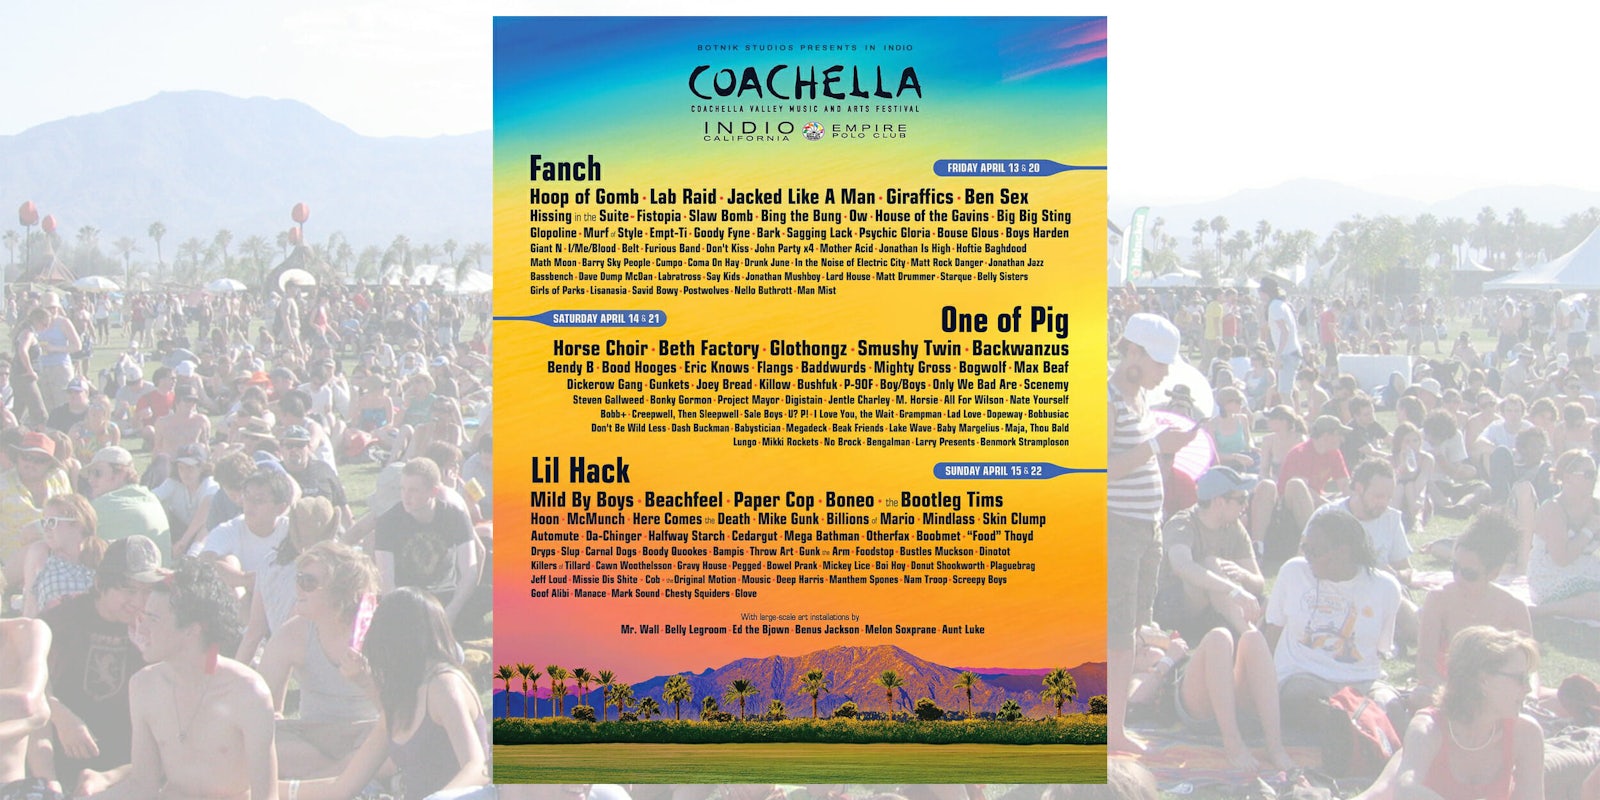 Coachella poster made by AI